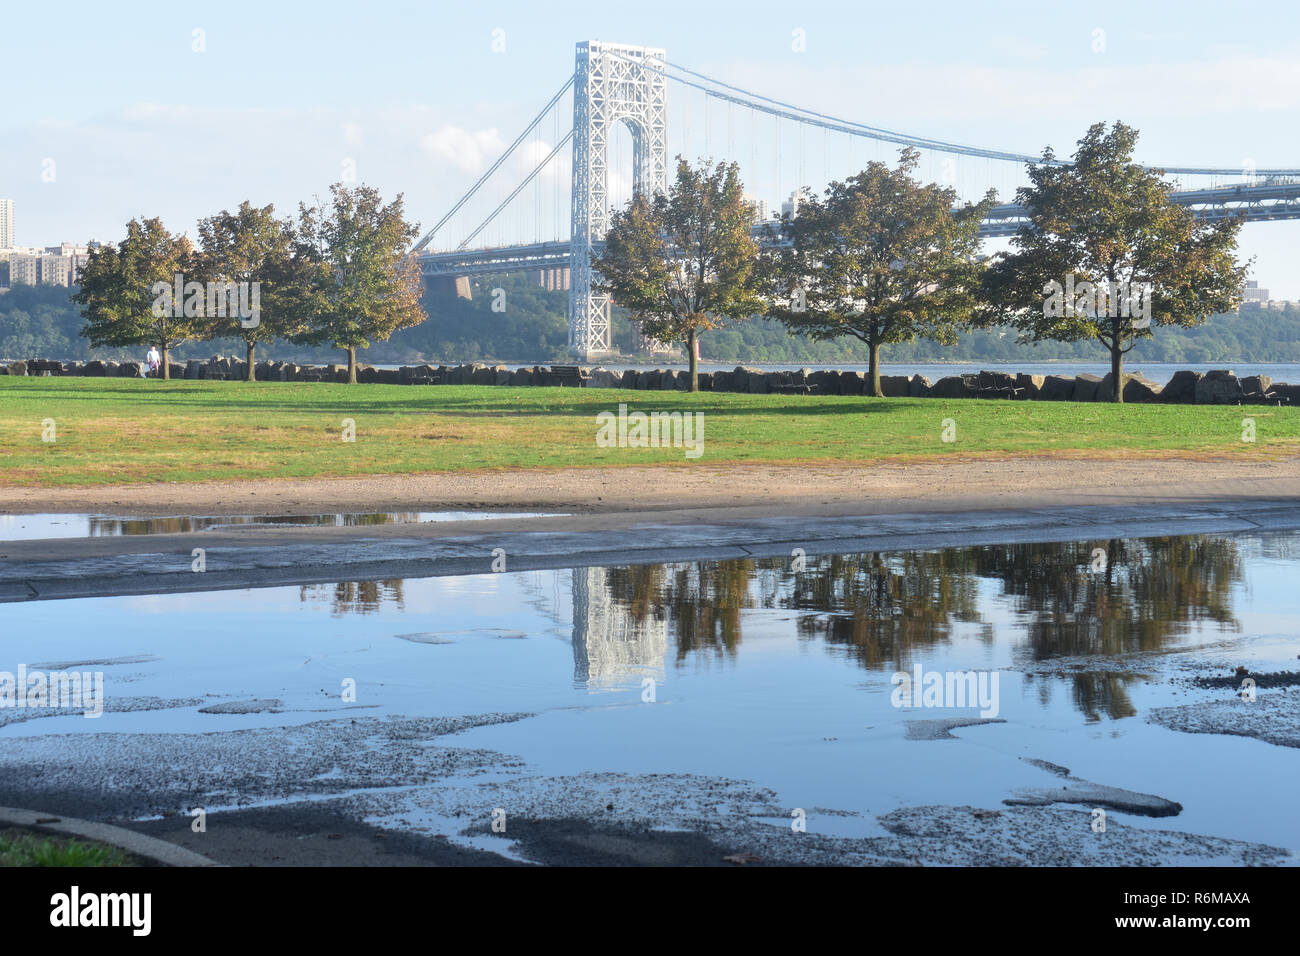 Die George Washington Bridge spiegelt sich in Regen Pfützen am Ross Dock Picknickplatz, Fort Lee, NJ Stockfoto